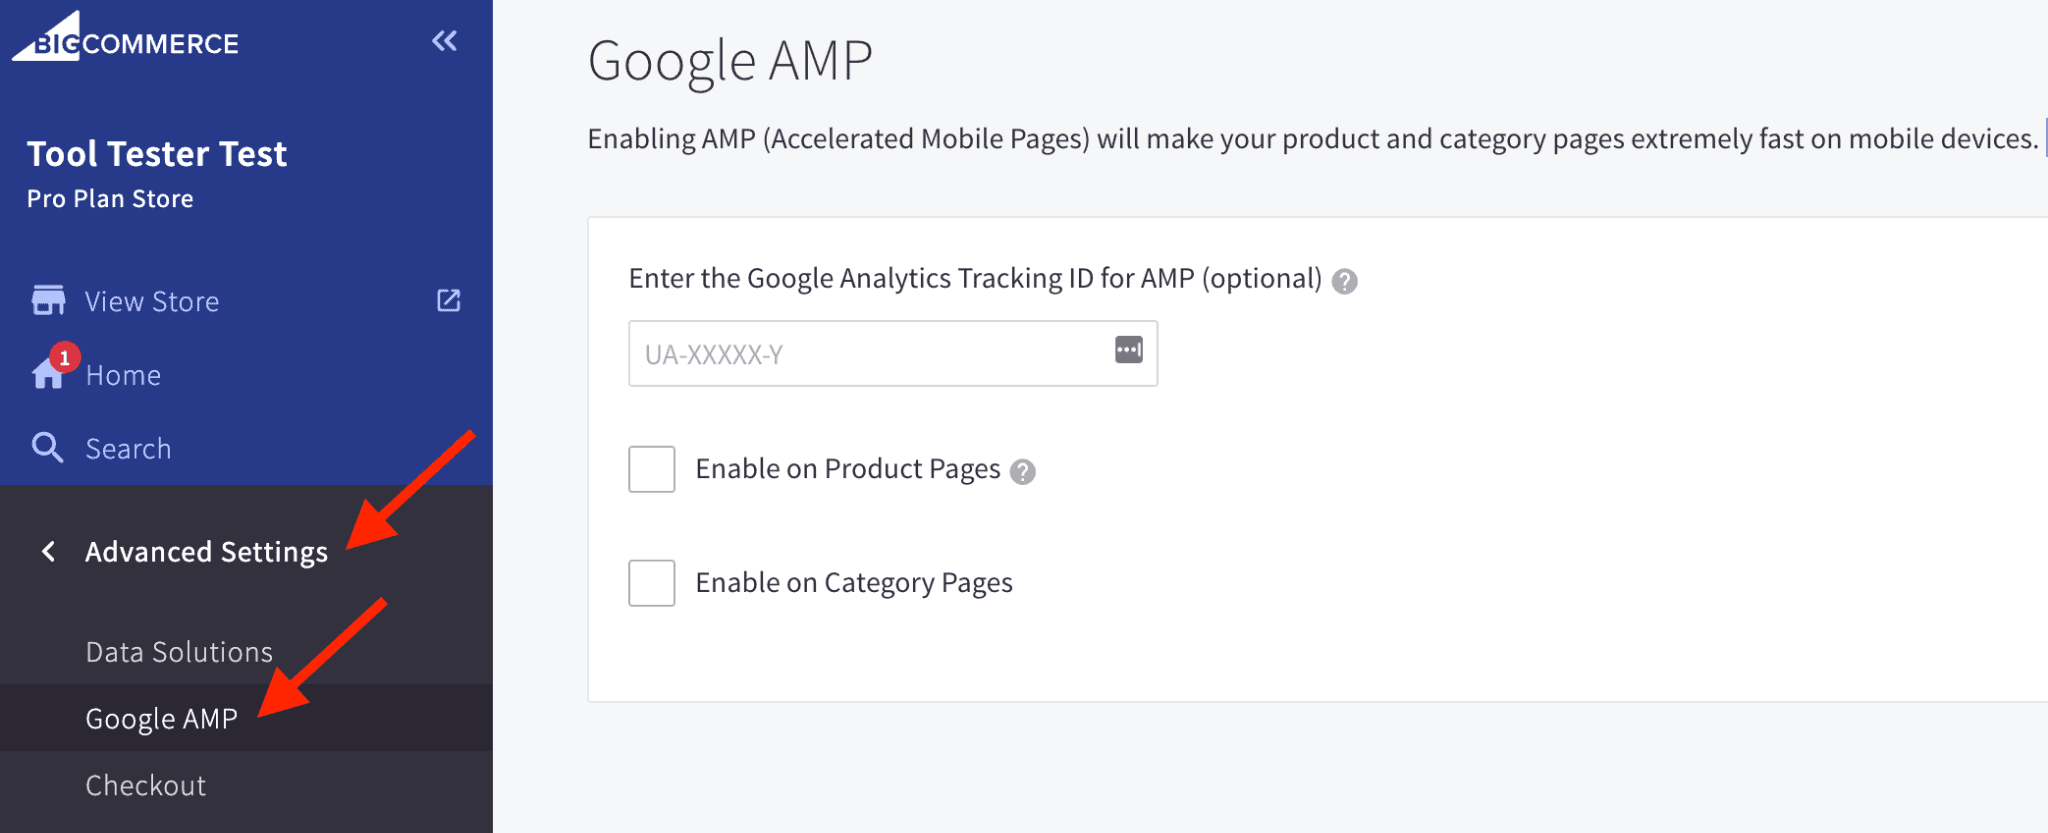 Setting Up Google AMP in BigCommerce